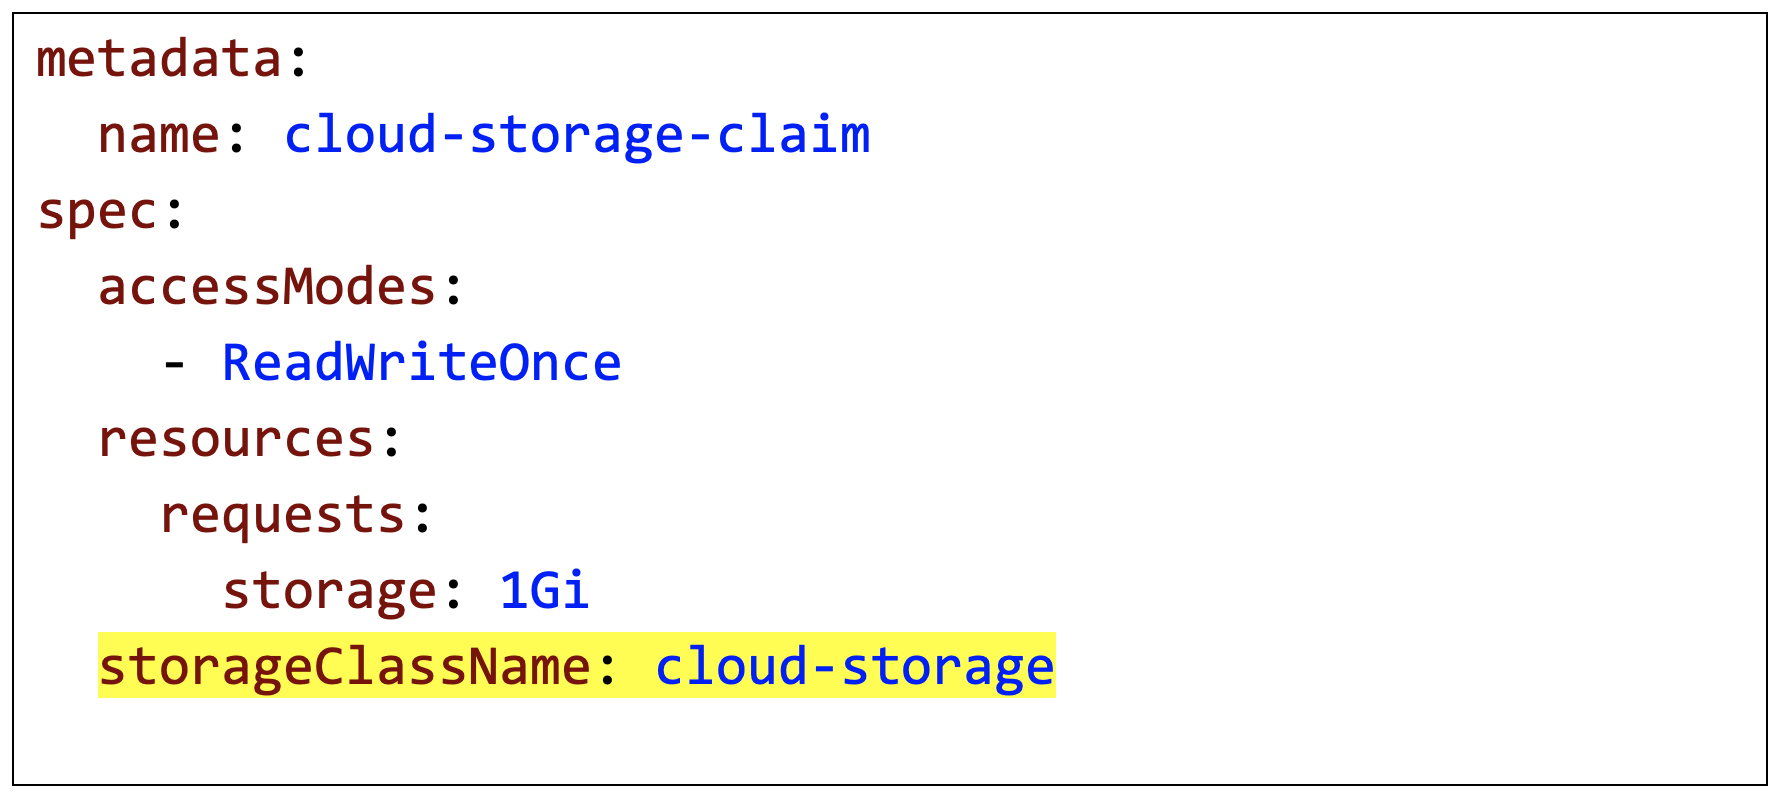 cloud-storage-claim